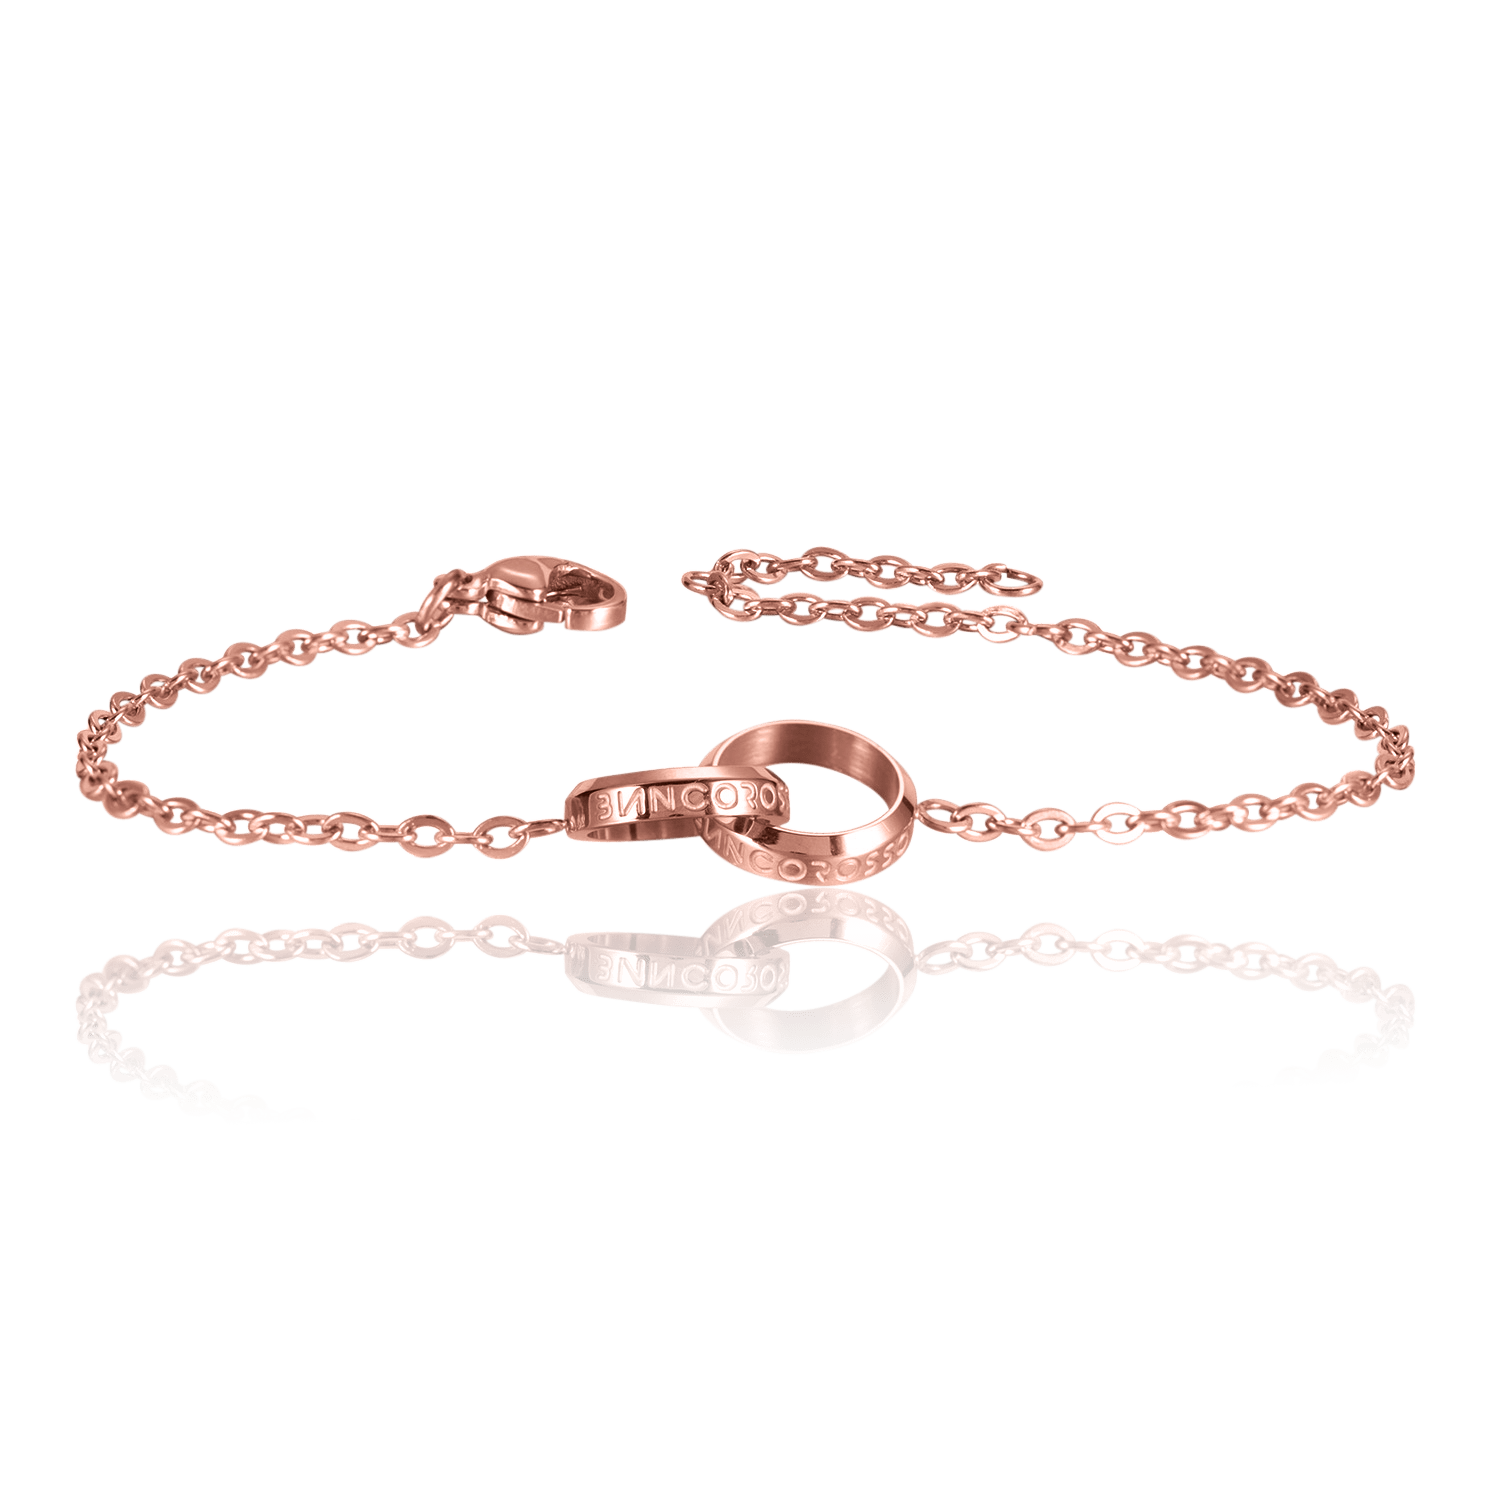 bianco rosso Bracelets To My Sister - Eternity Bracelet cyprus greece jewelry gift free shipping europe worldwide